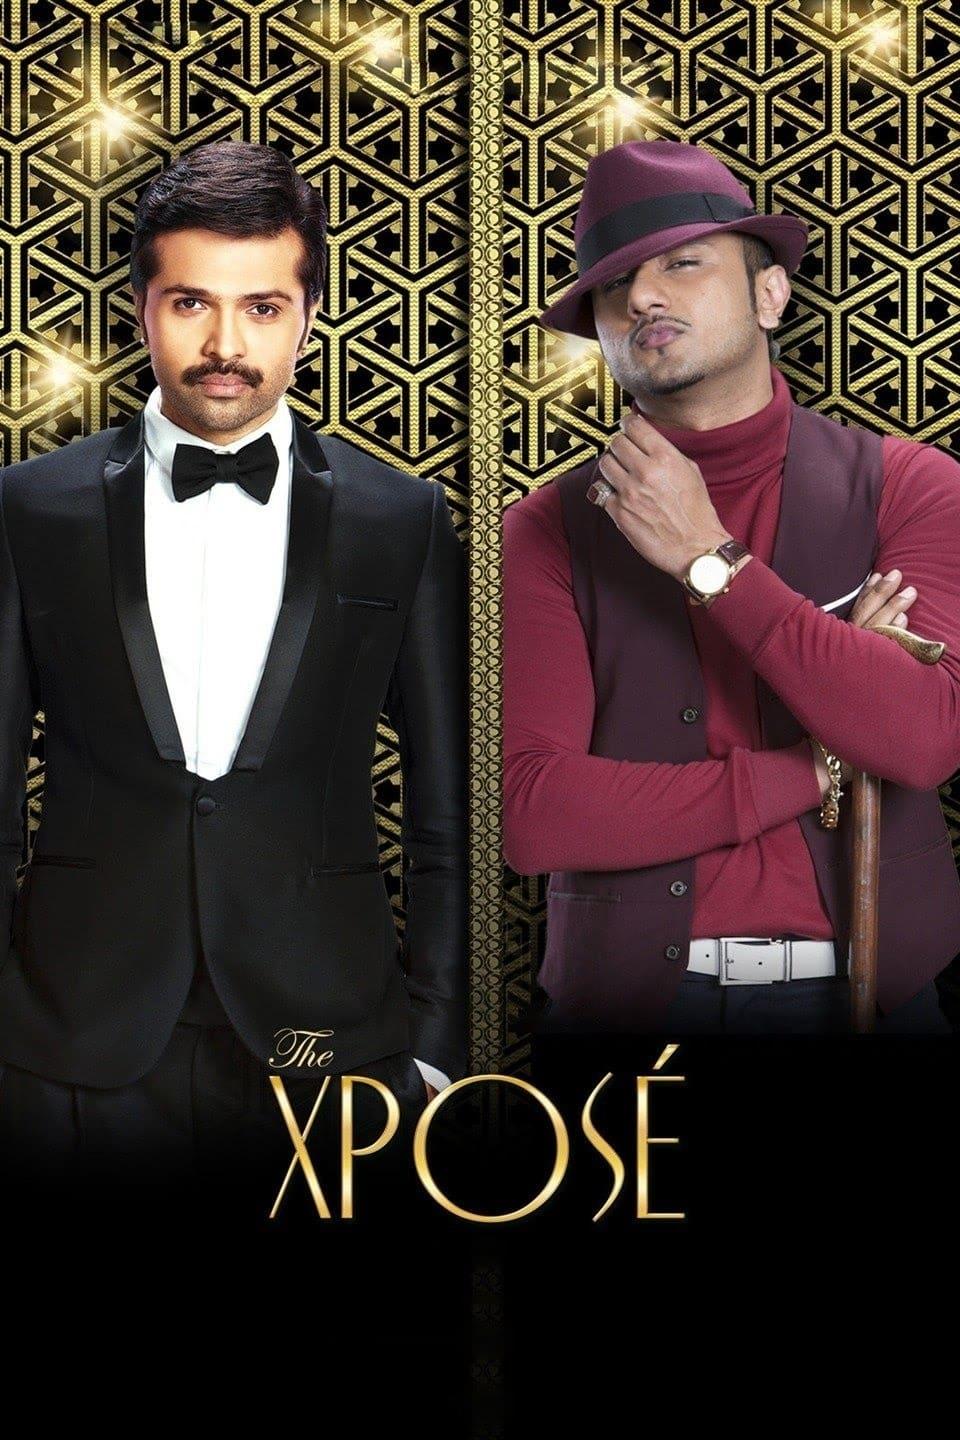 The Xposé poster